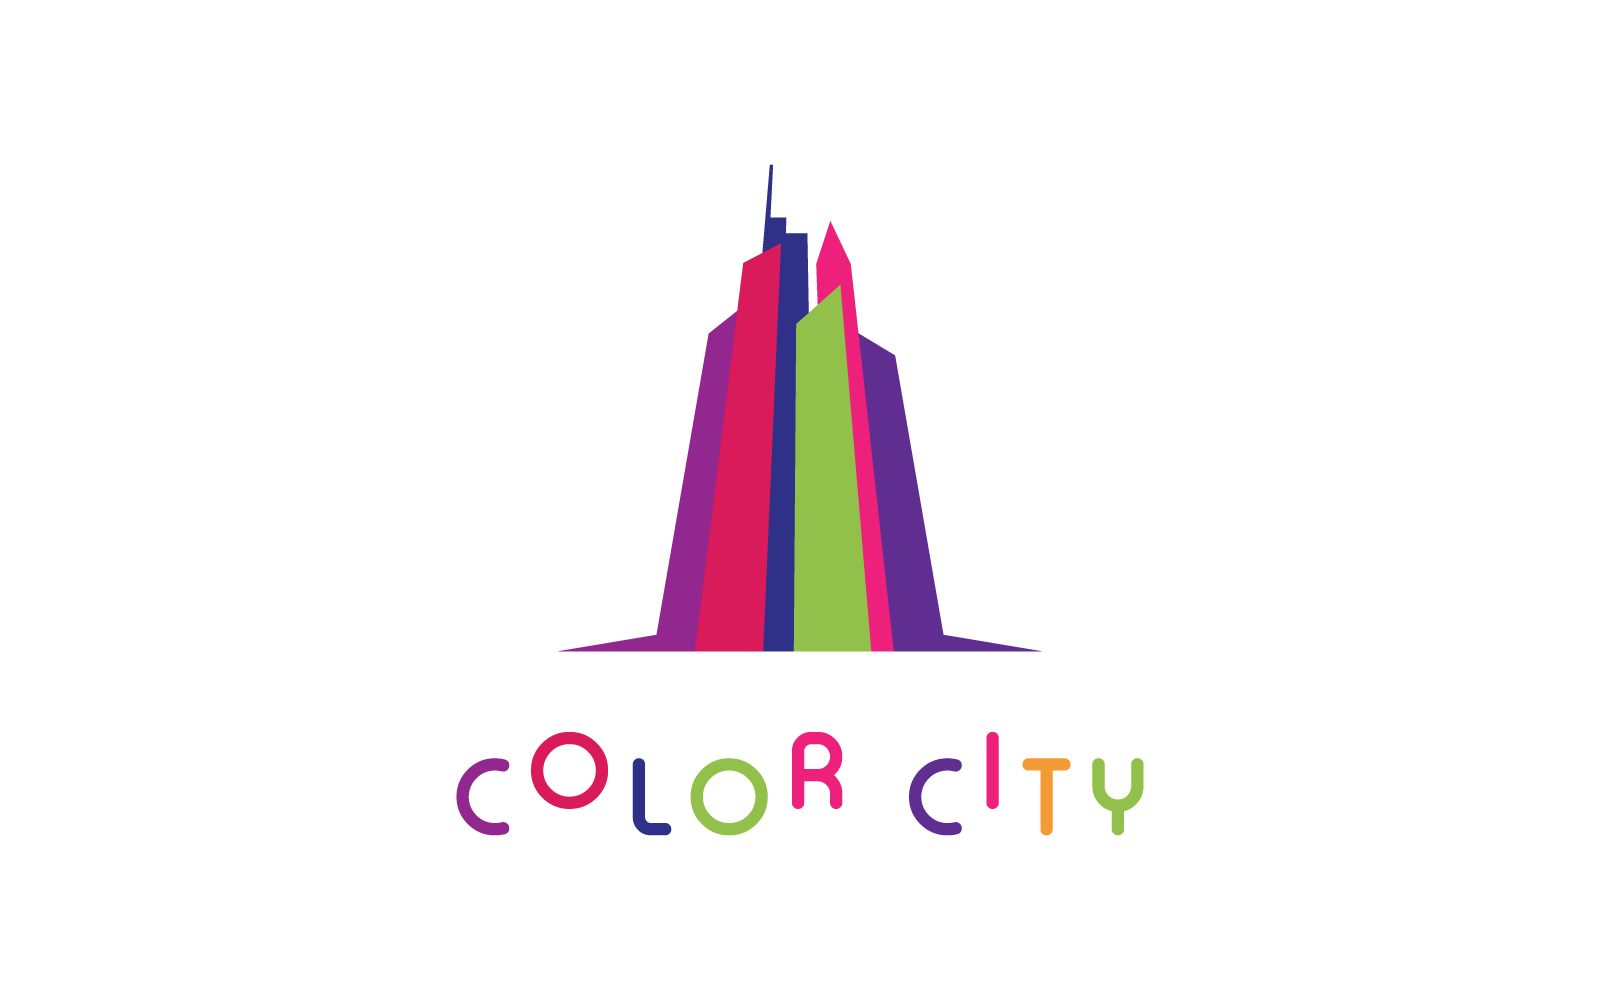 Modern City skyline vector illustration design template